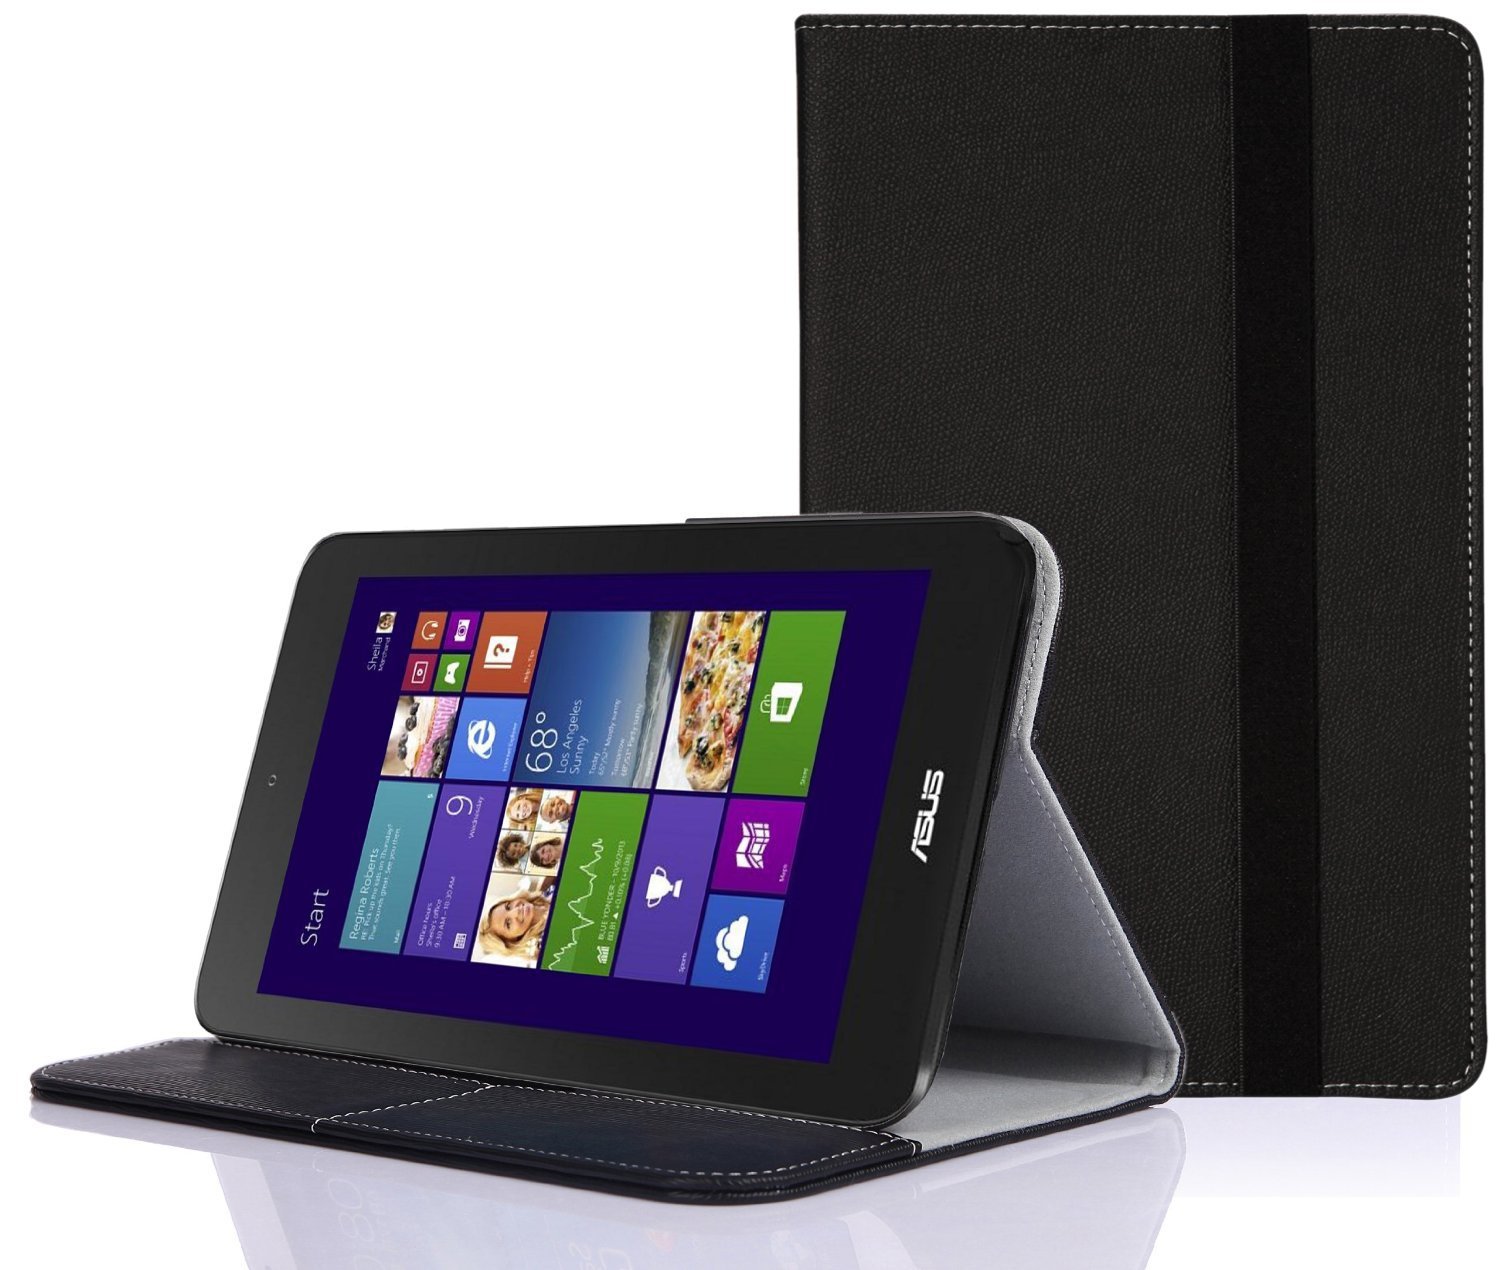 Asus Hadirkan Tablet Basis Windows 8.1, harga Rp 3 Jutaan